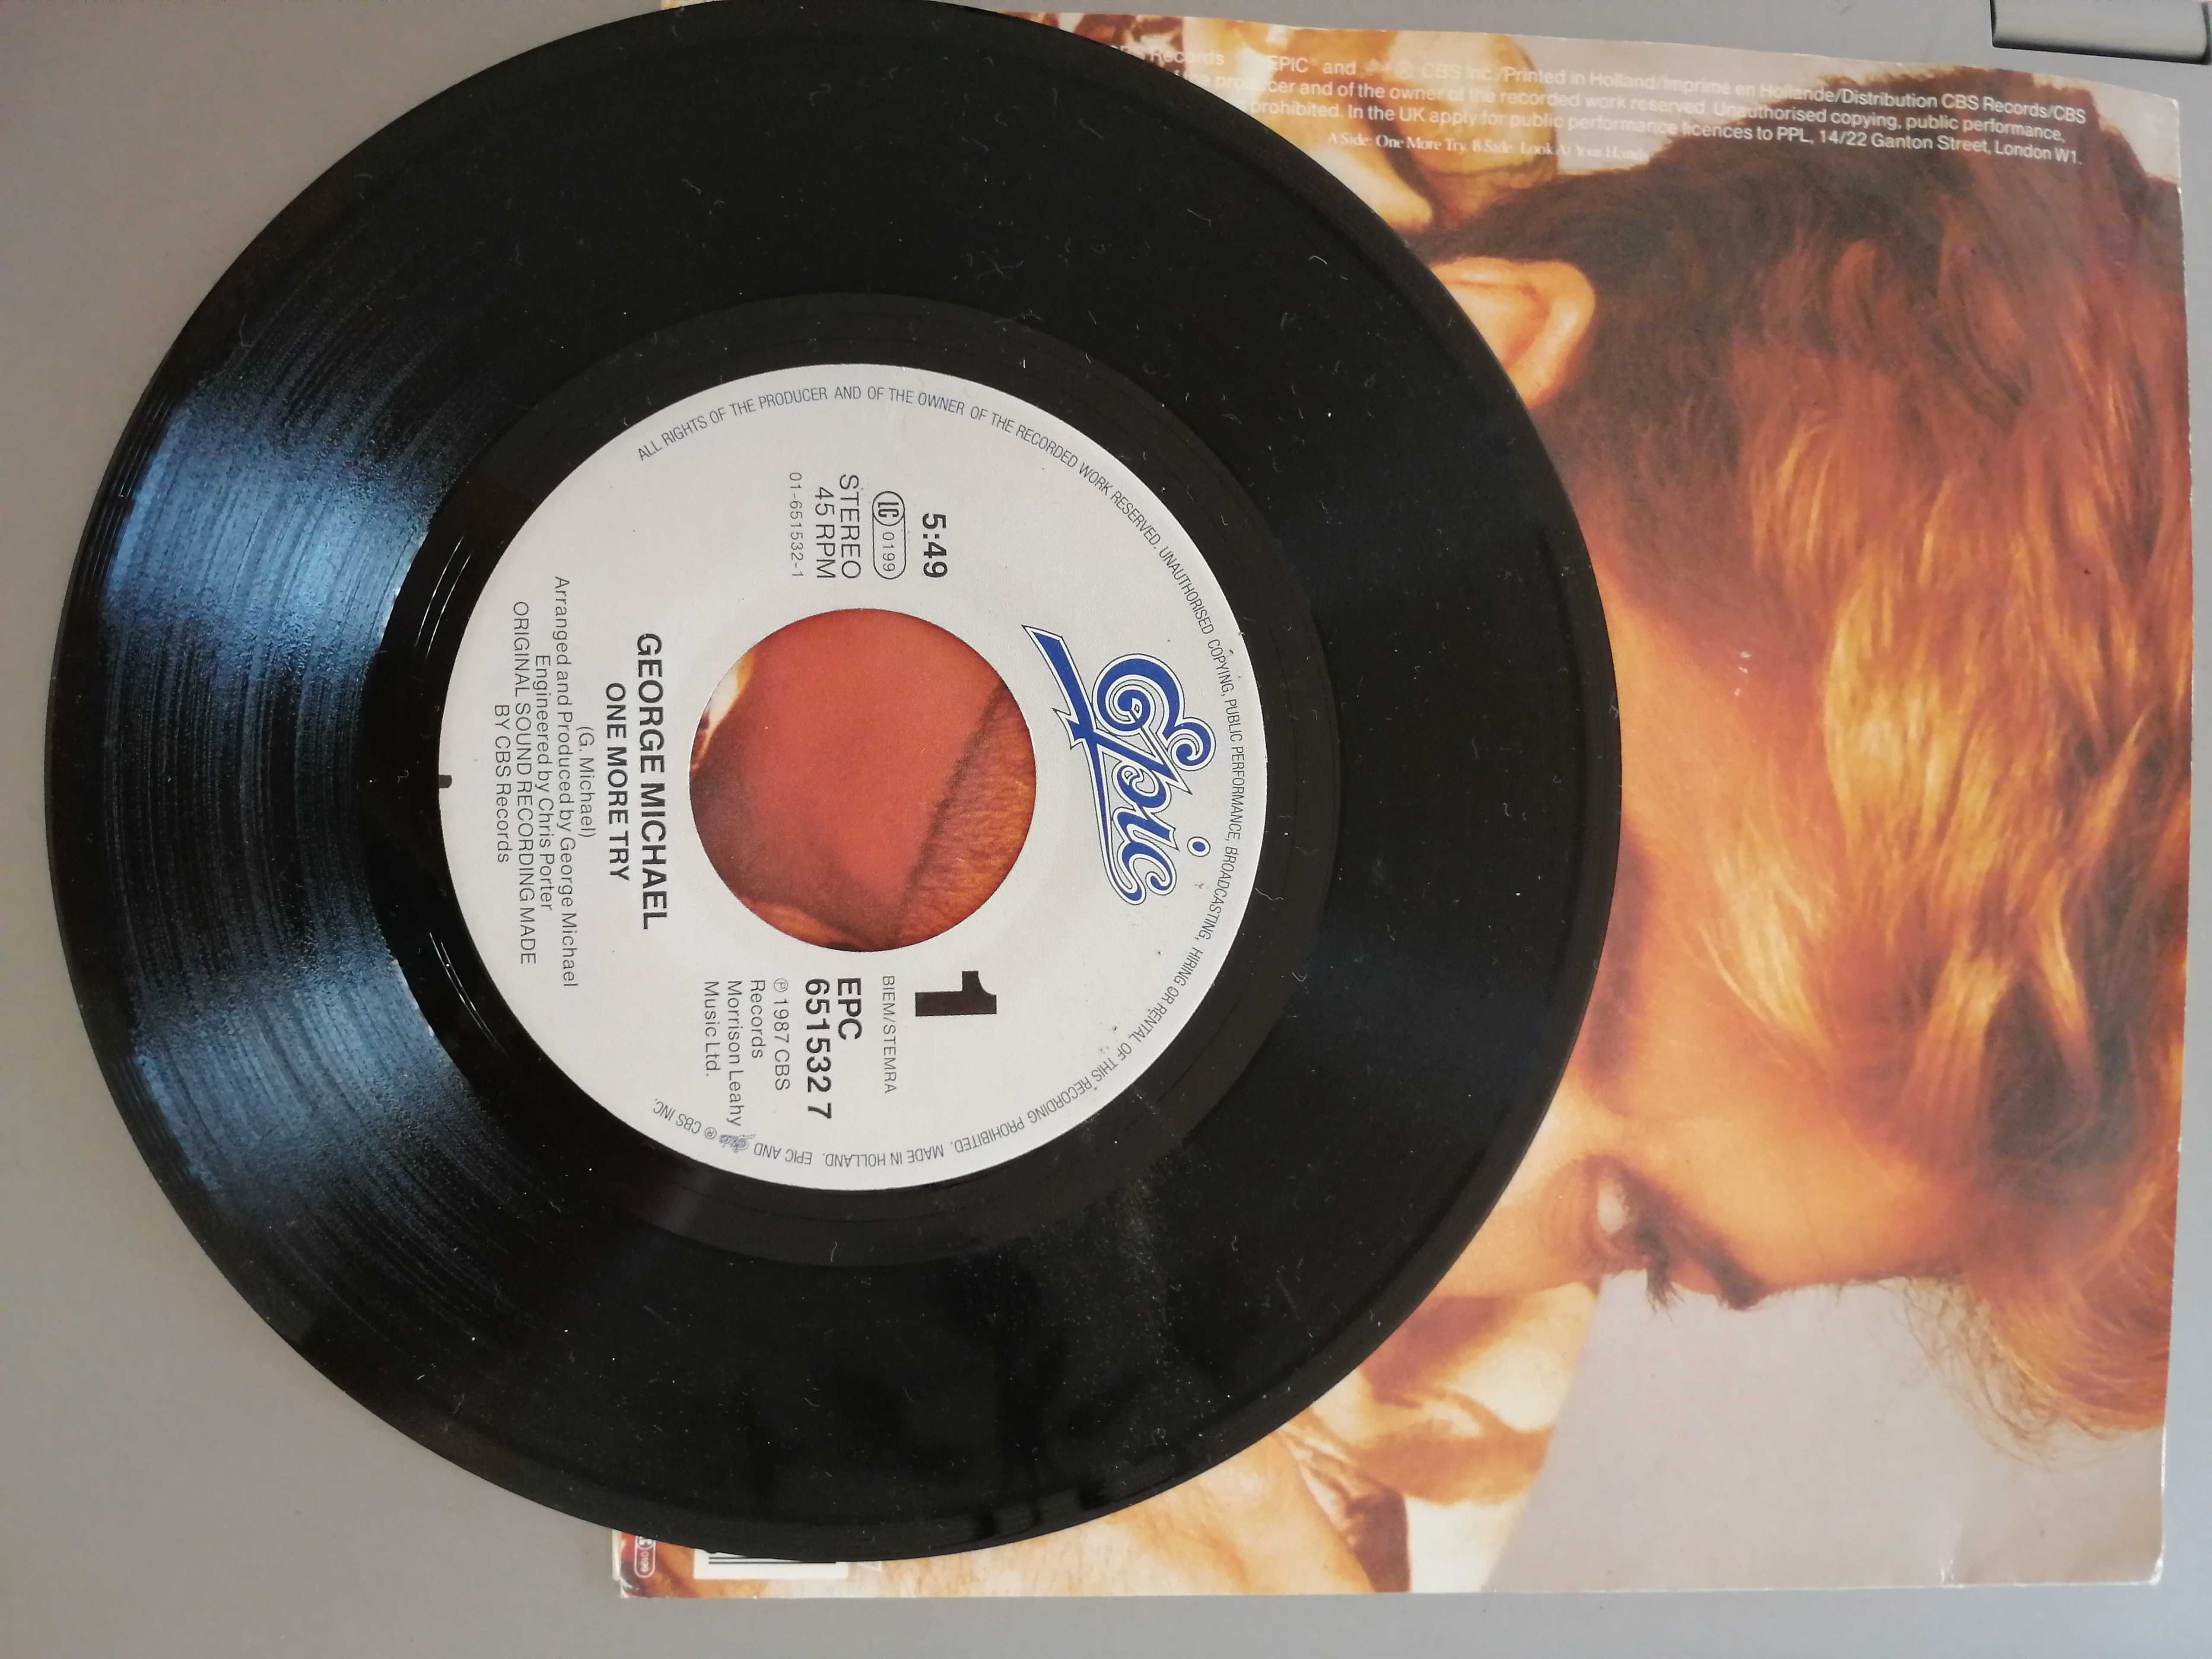 Vinil George Michael 45 rpm